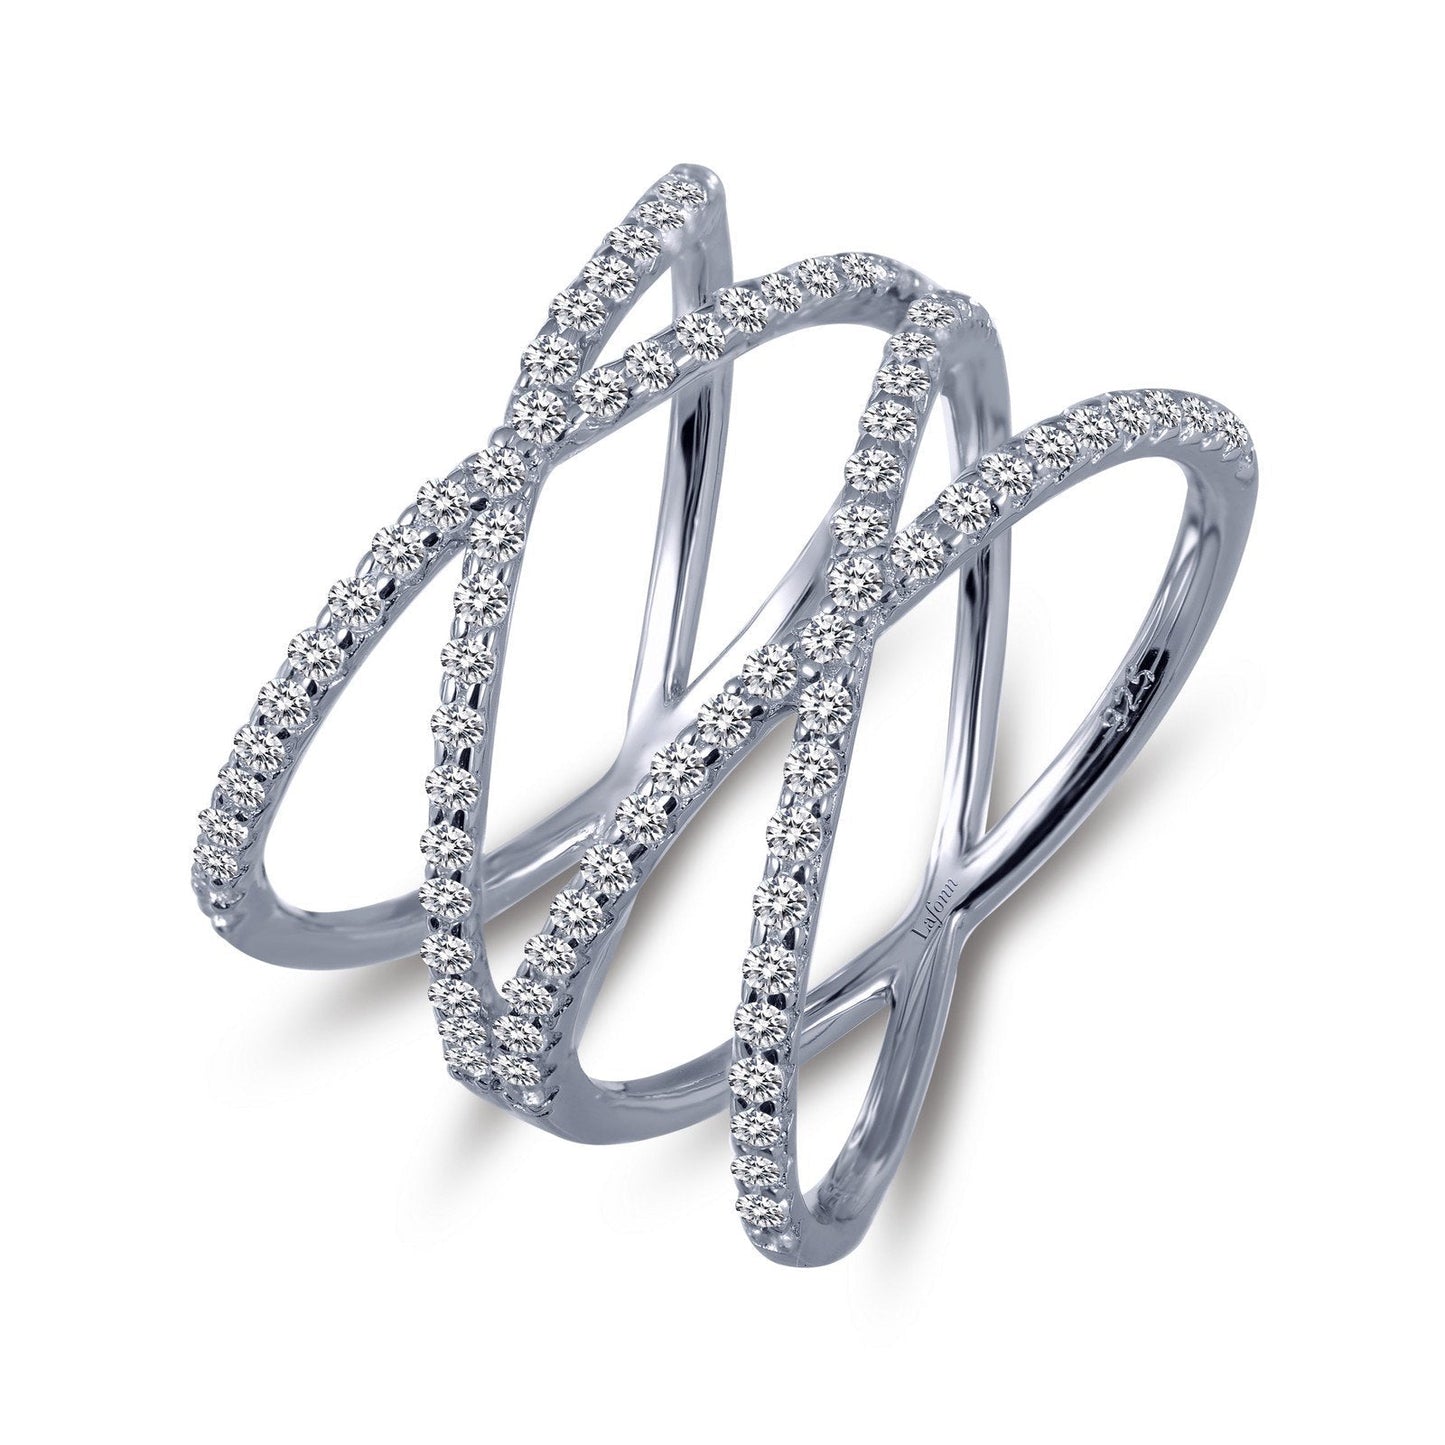 Lafonn Double Crisscross Ring Simulated Diamond RINGS Size 7 Platinum 0.92 CTS 